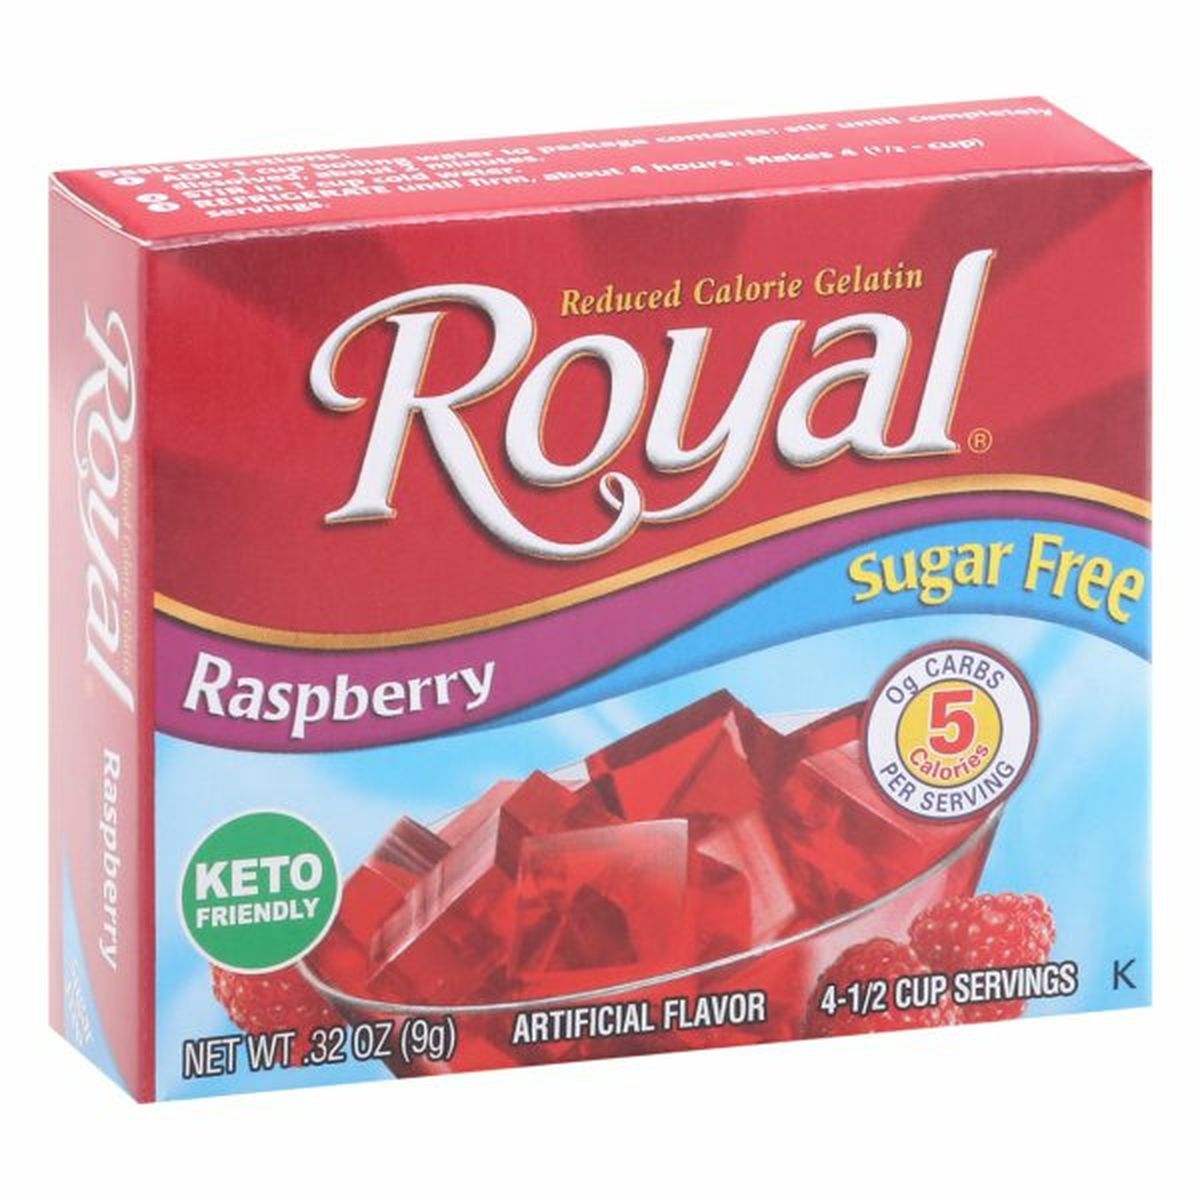 Calories in Royal Gelatin, Sugar Free, Raspberry